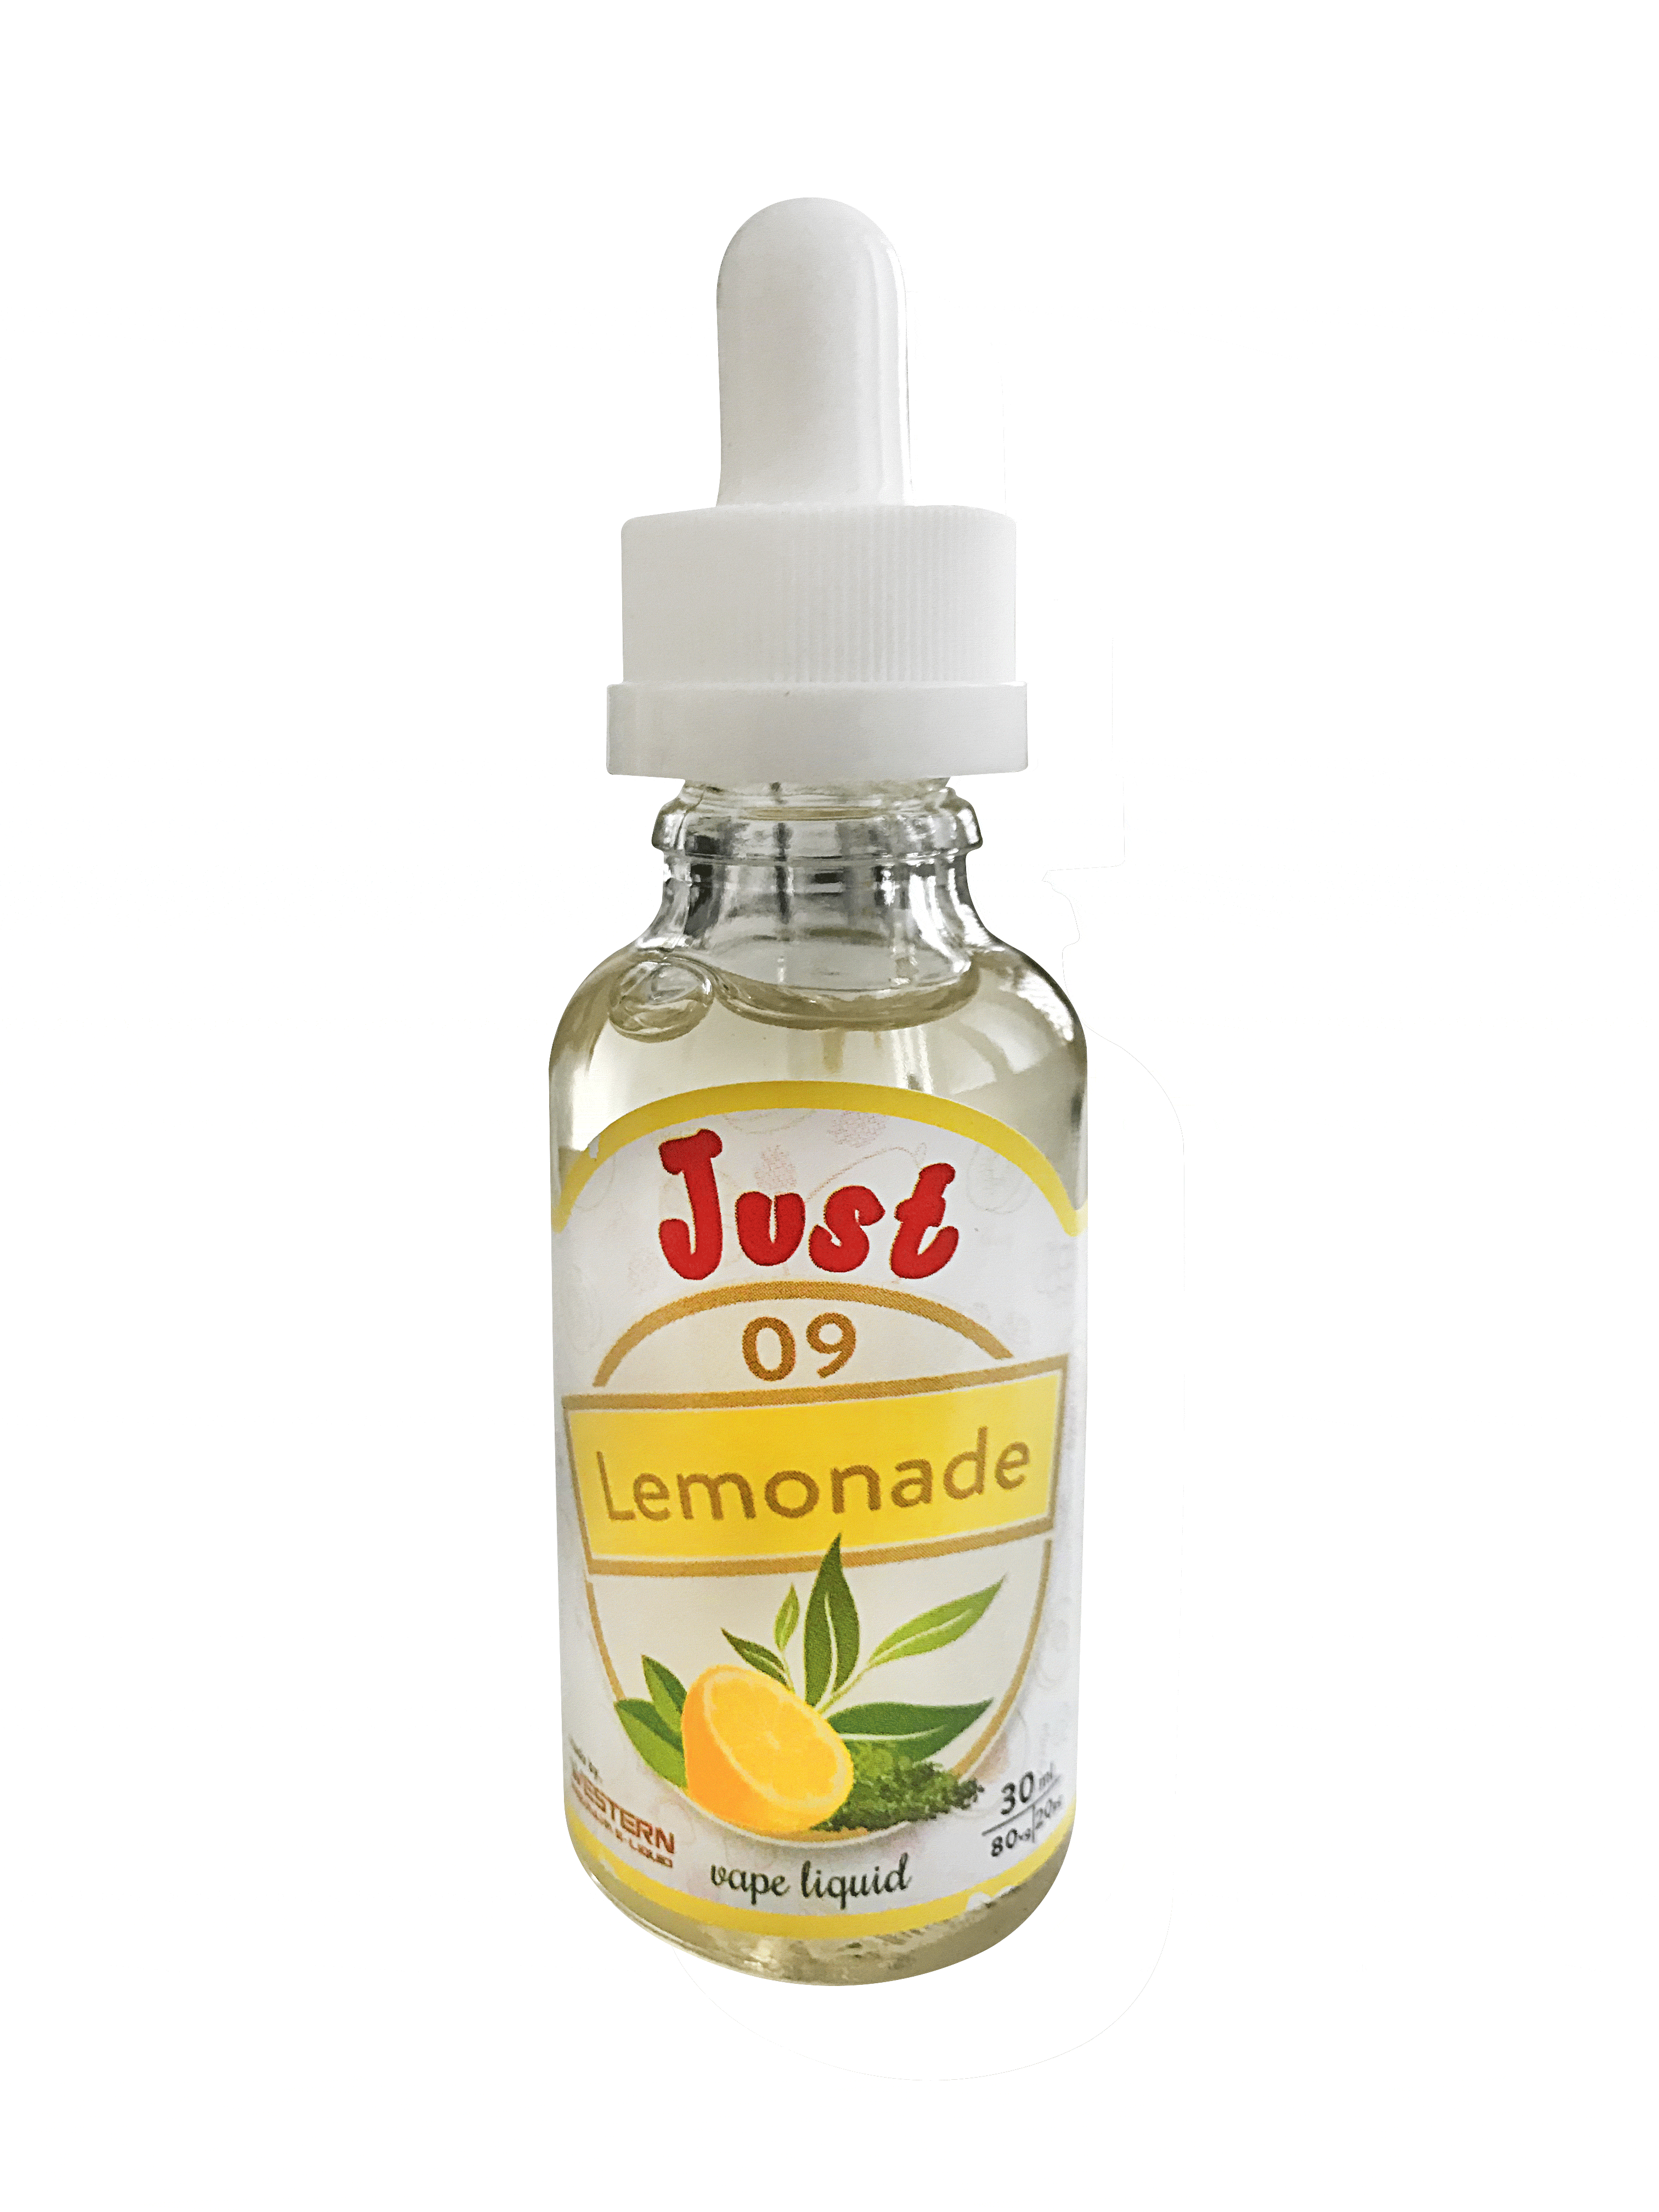 Just Premium - Lemonade Elektronik Sigara Likiti (30 ml)